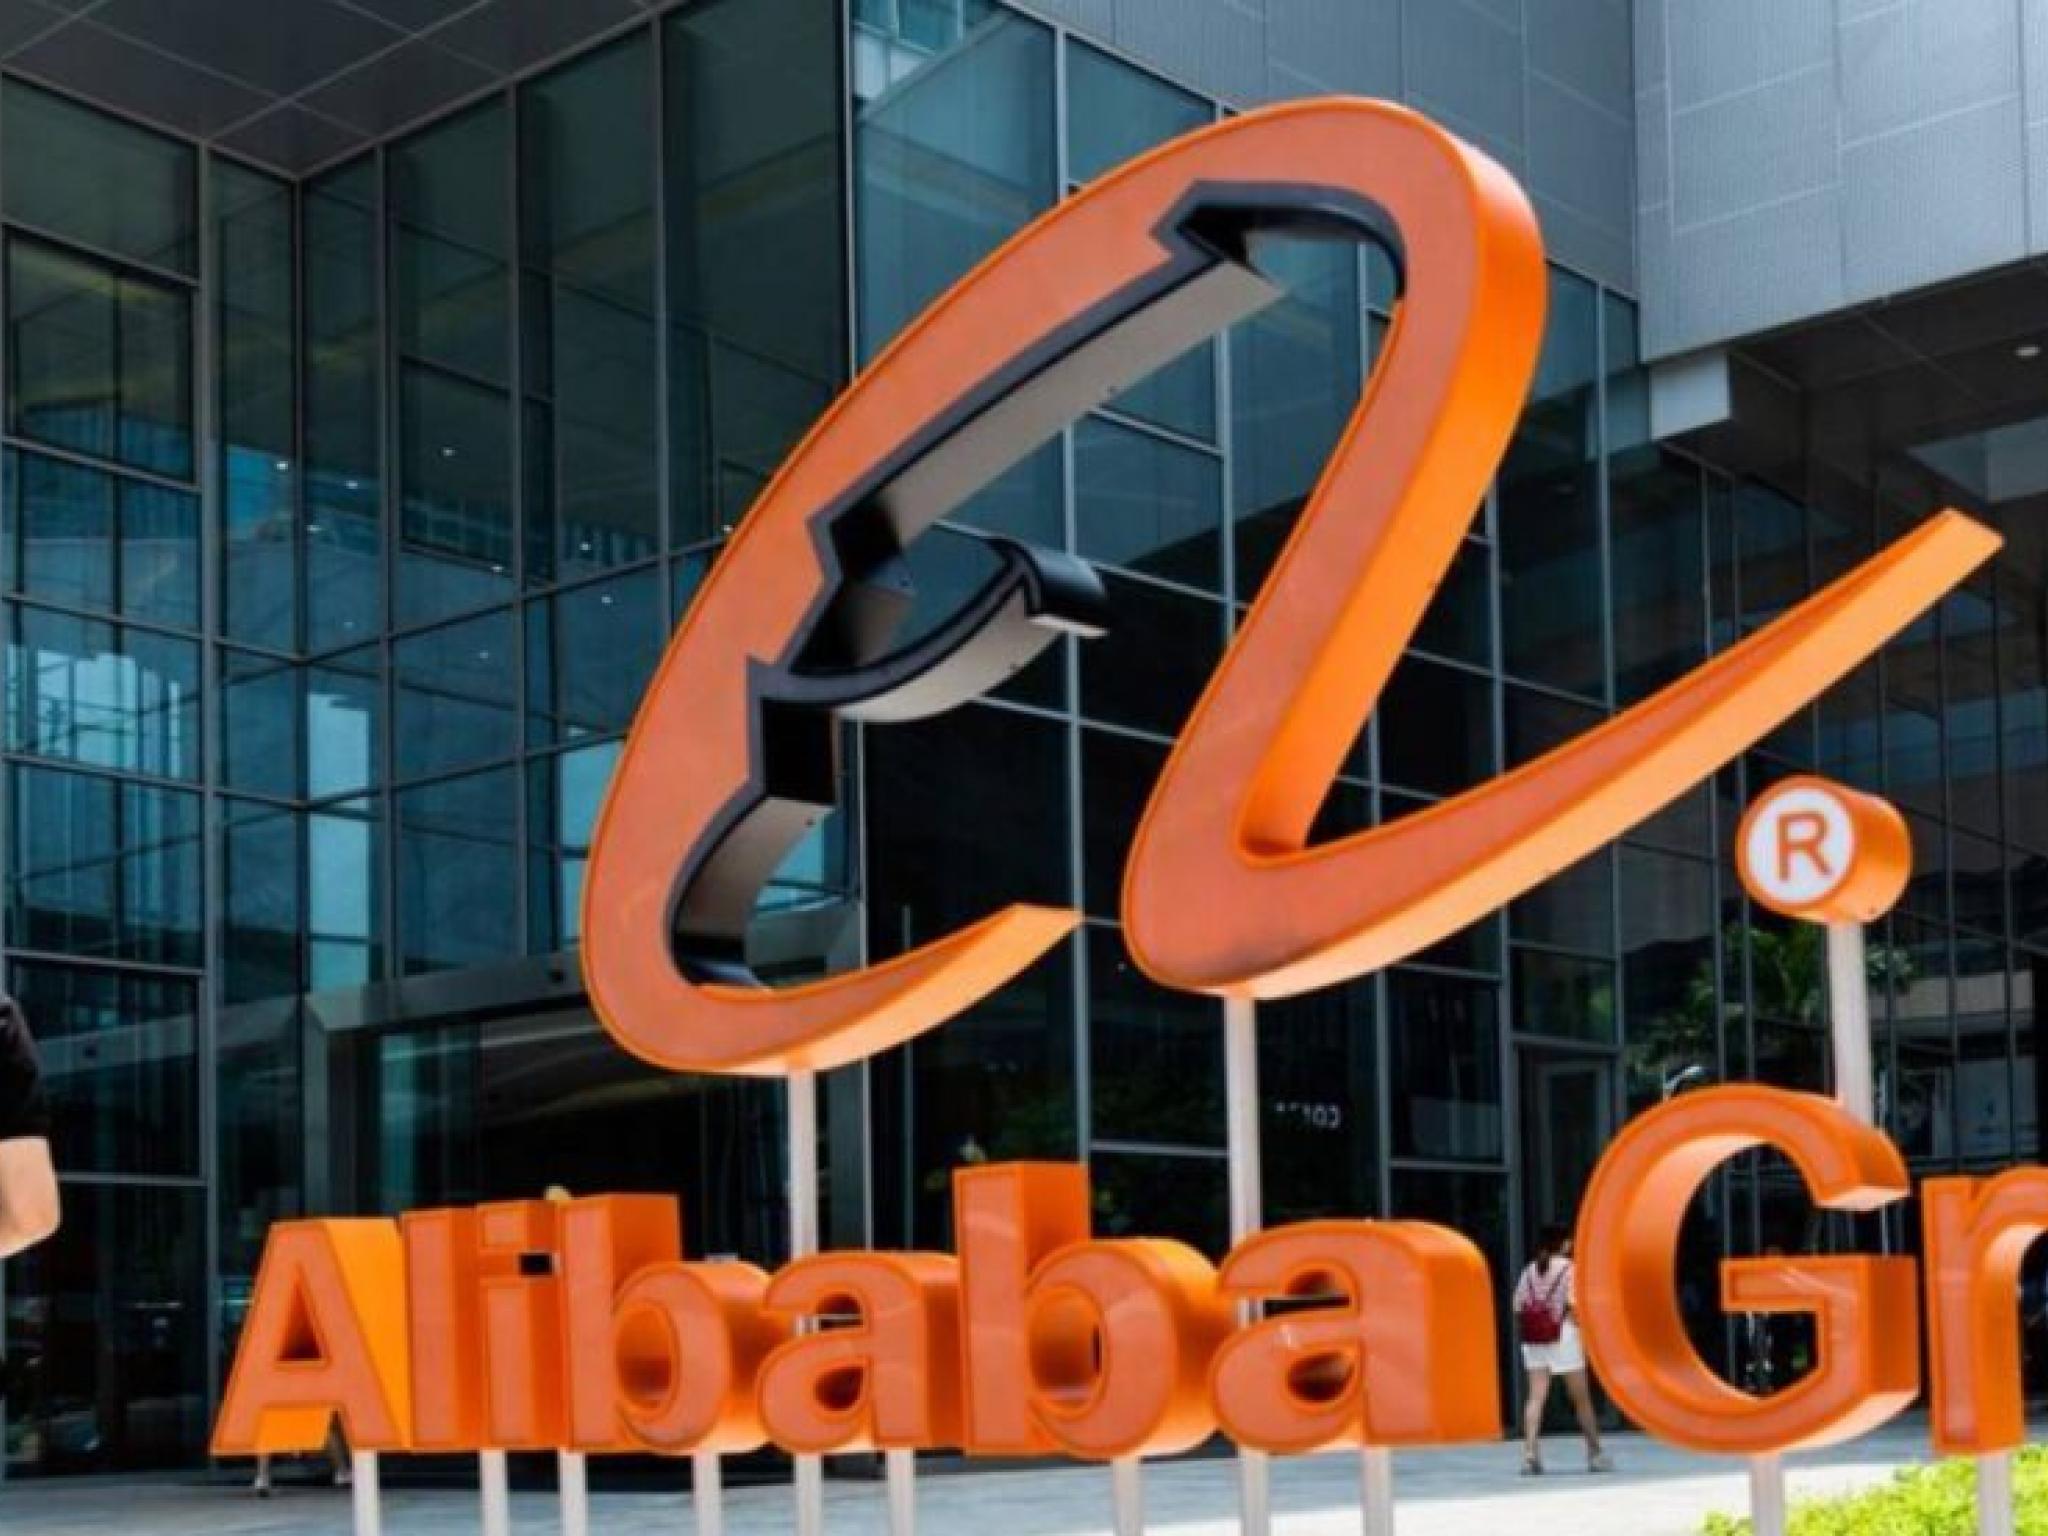  alibaba-vs-pdd-shifting-market-dynamics-of-chinas-e-commerce-landscape 